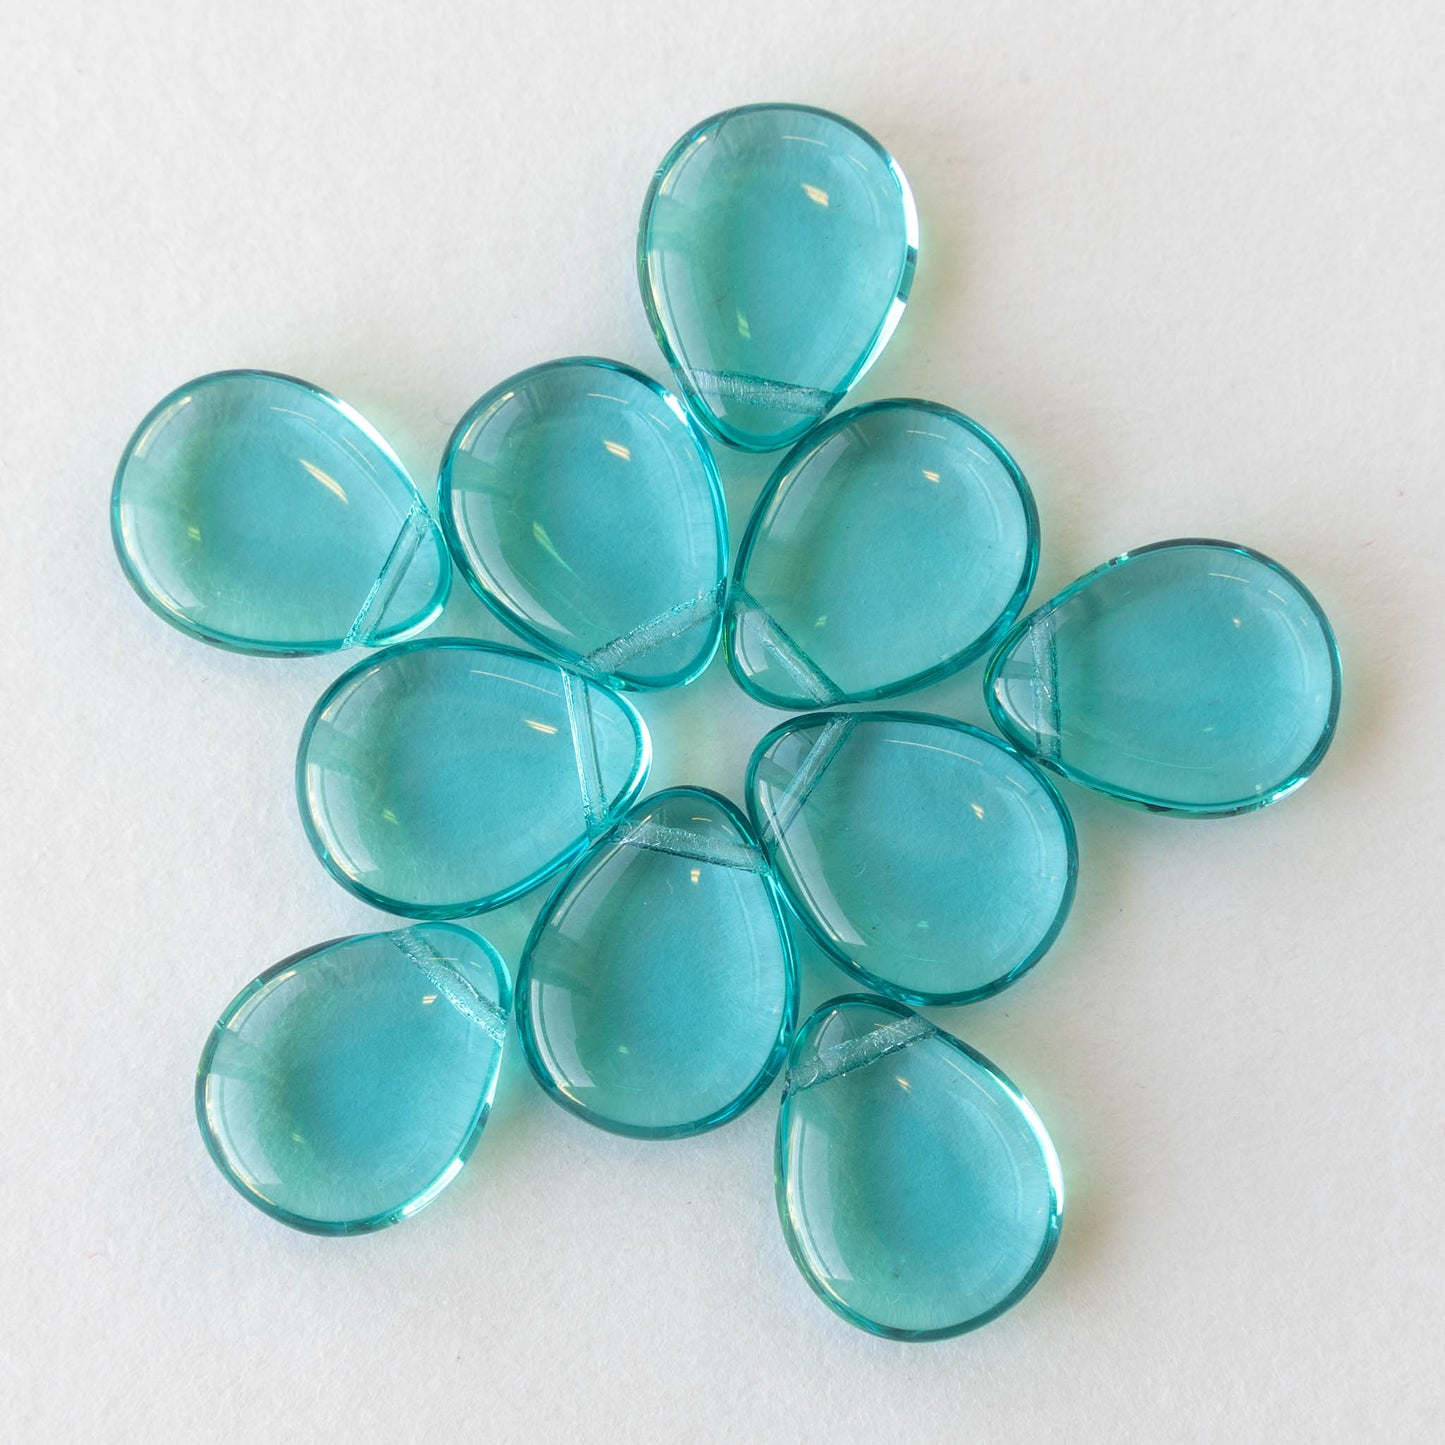 Load image into Gallery viewer, 12x16mm Flat Glass Teardrop Beads - Seafoam - 20 Beads
